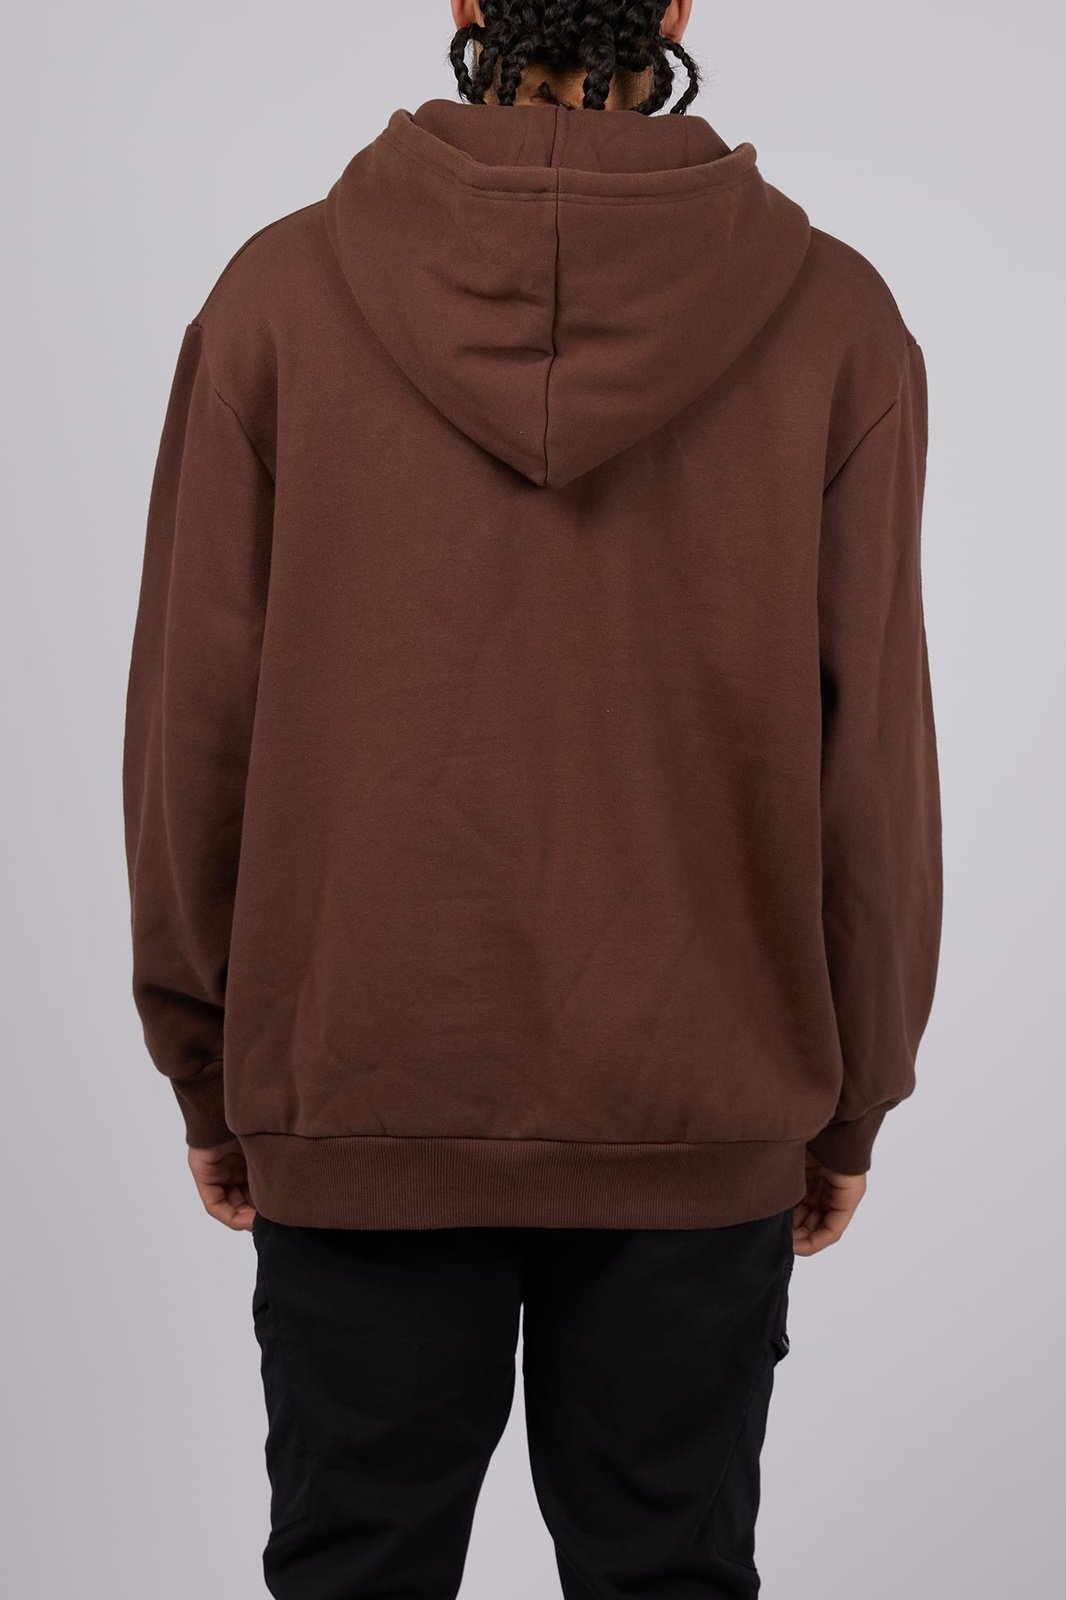 ST GOLIATH Australia hoodie - Brown